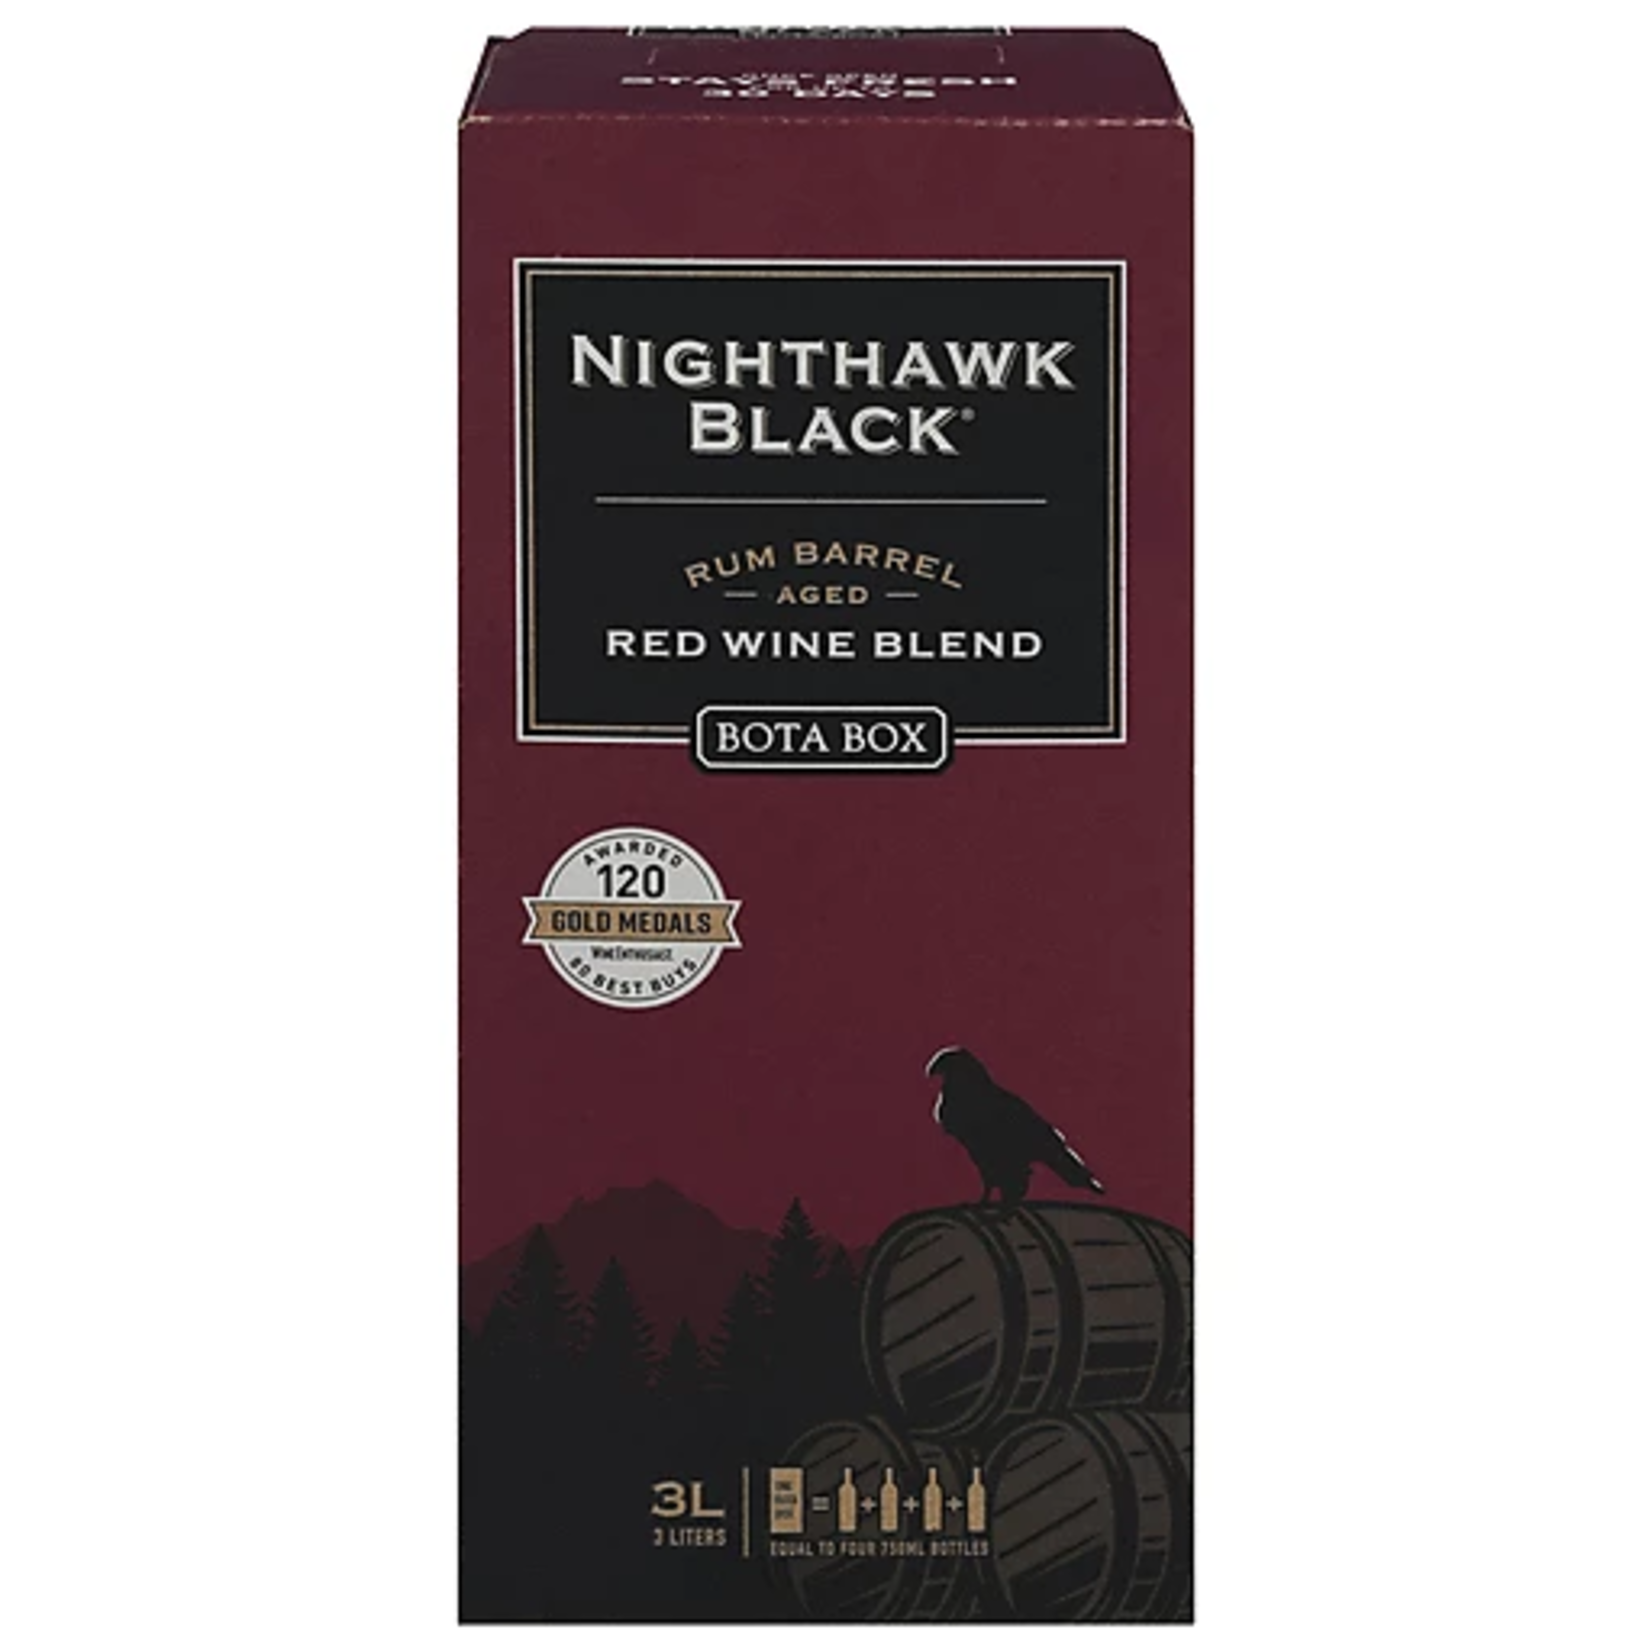 bota-box-bota-box-nighthawk-black-rum-barrel-red-blend-3-l-fenwick-liquor